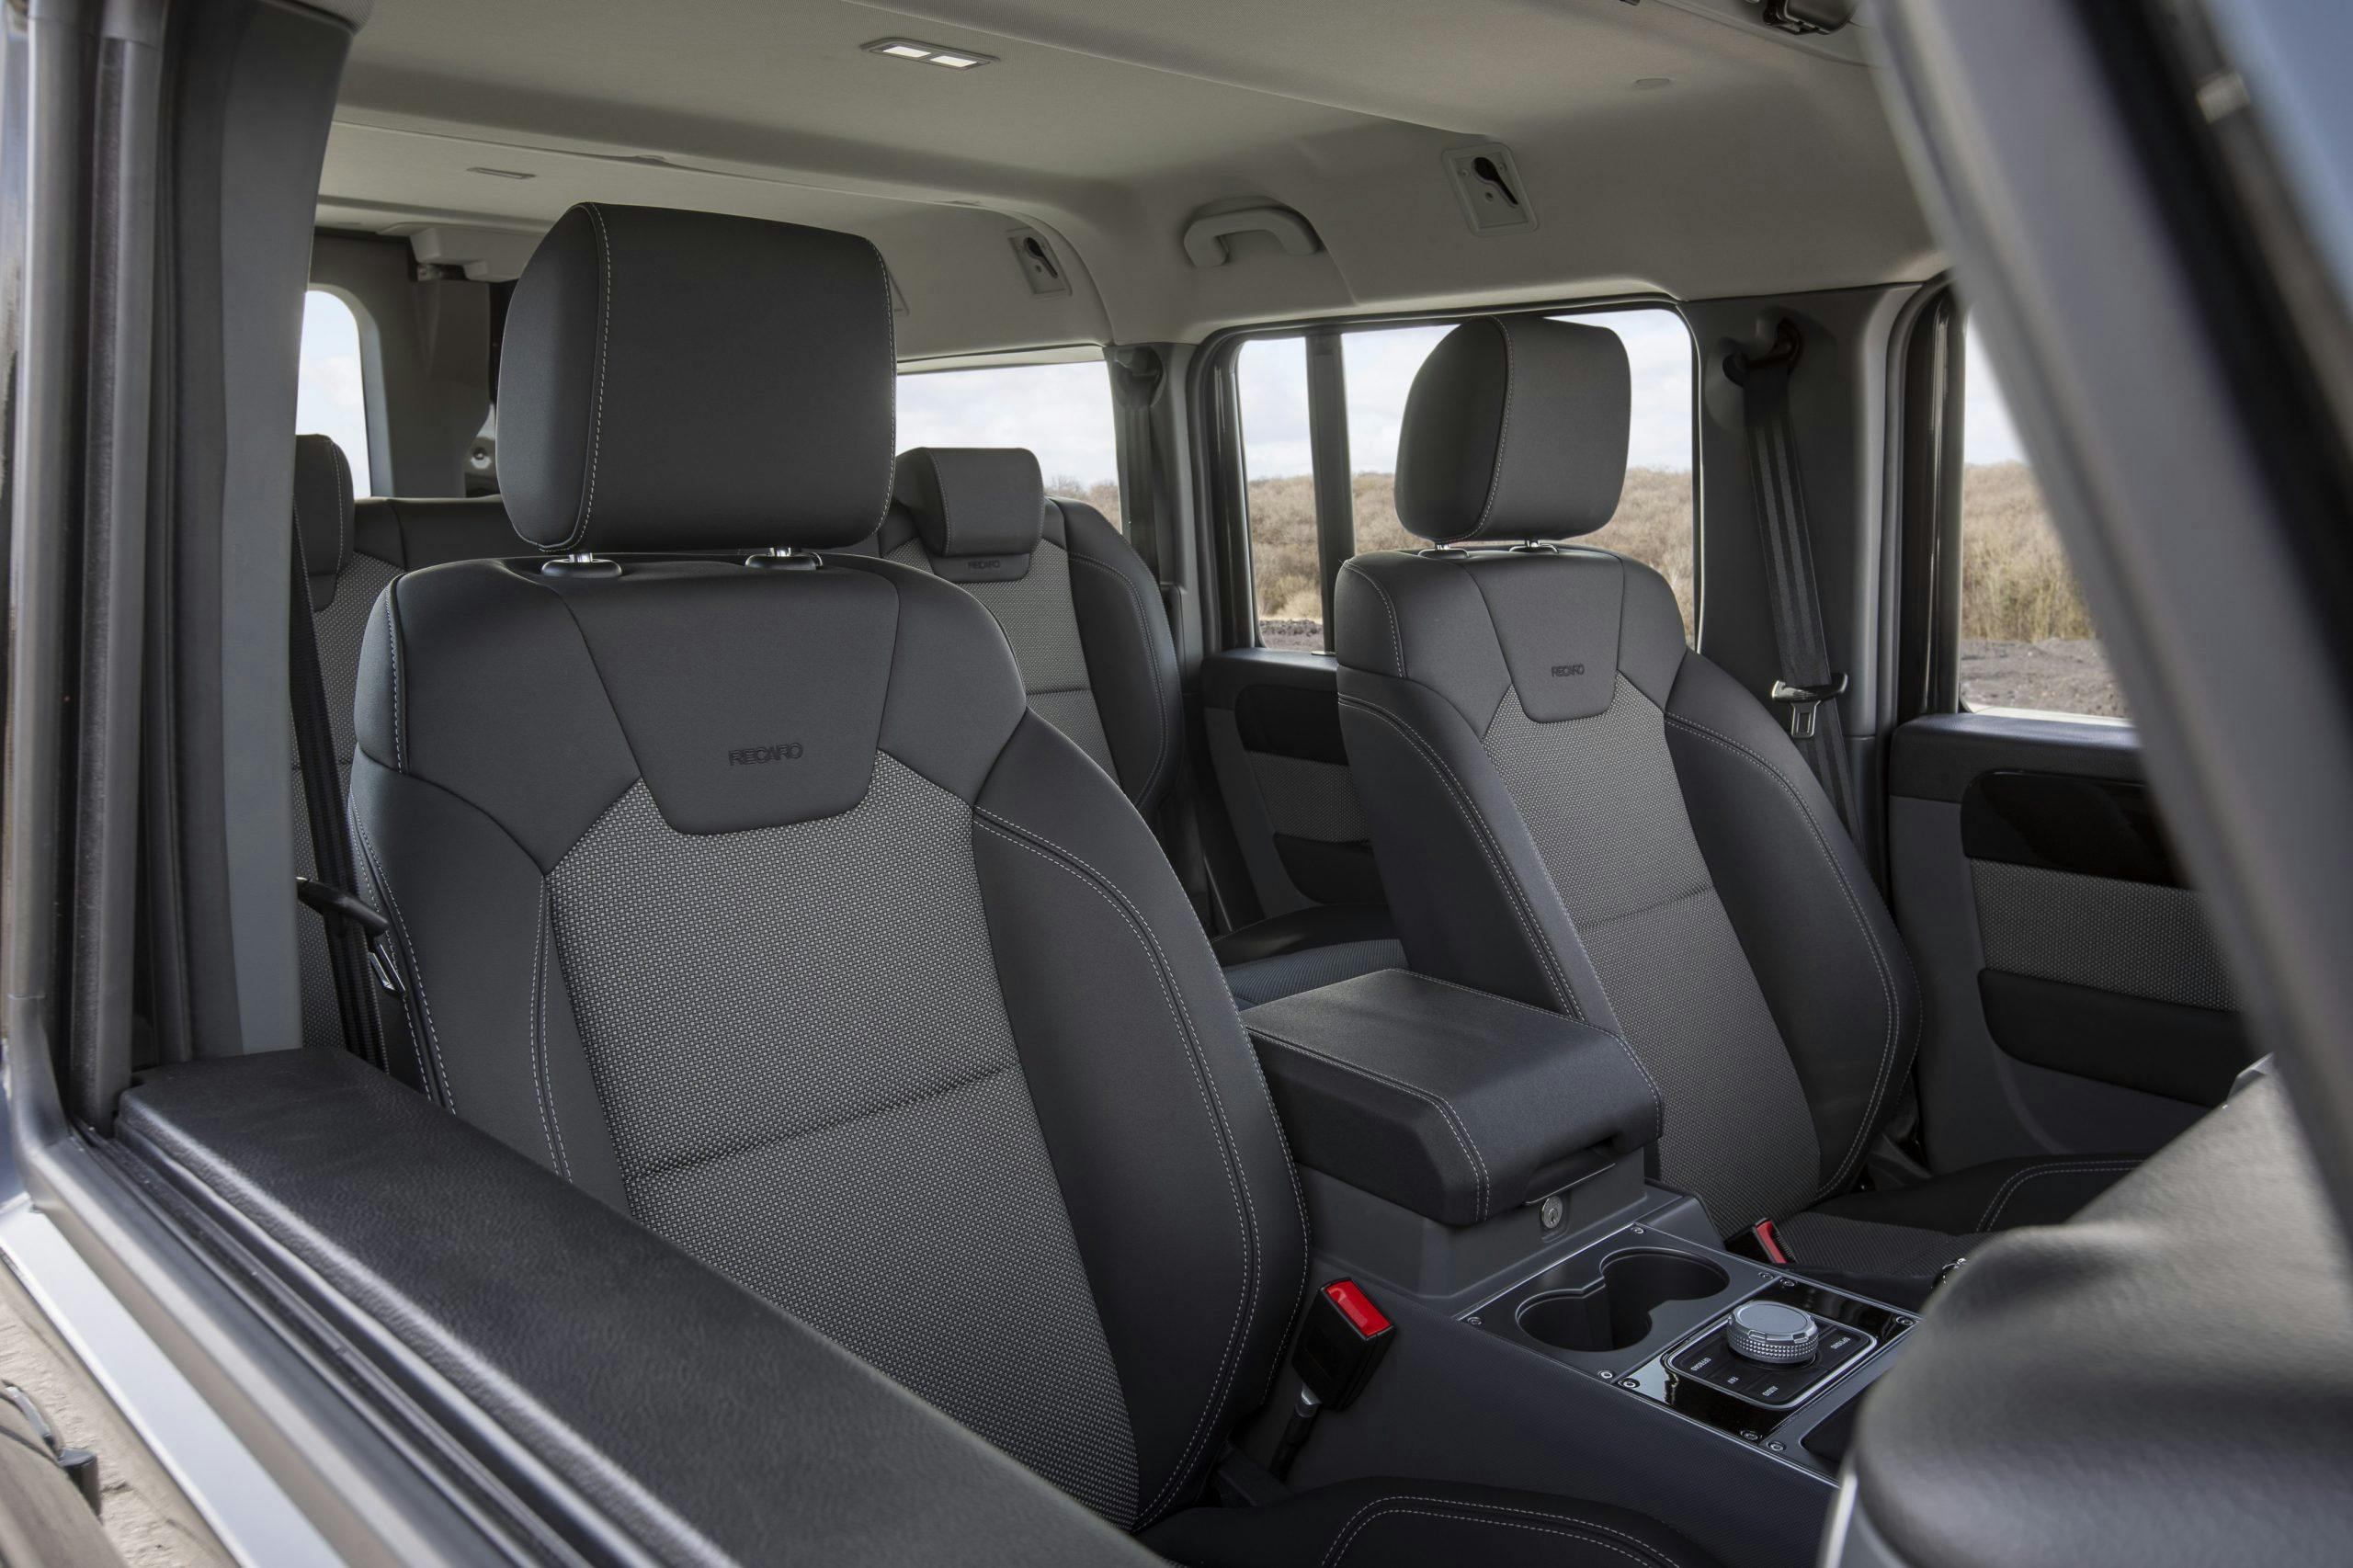 2022 Ineos Grenadier 4x4 interior front seat